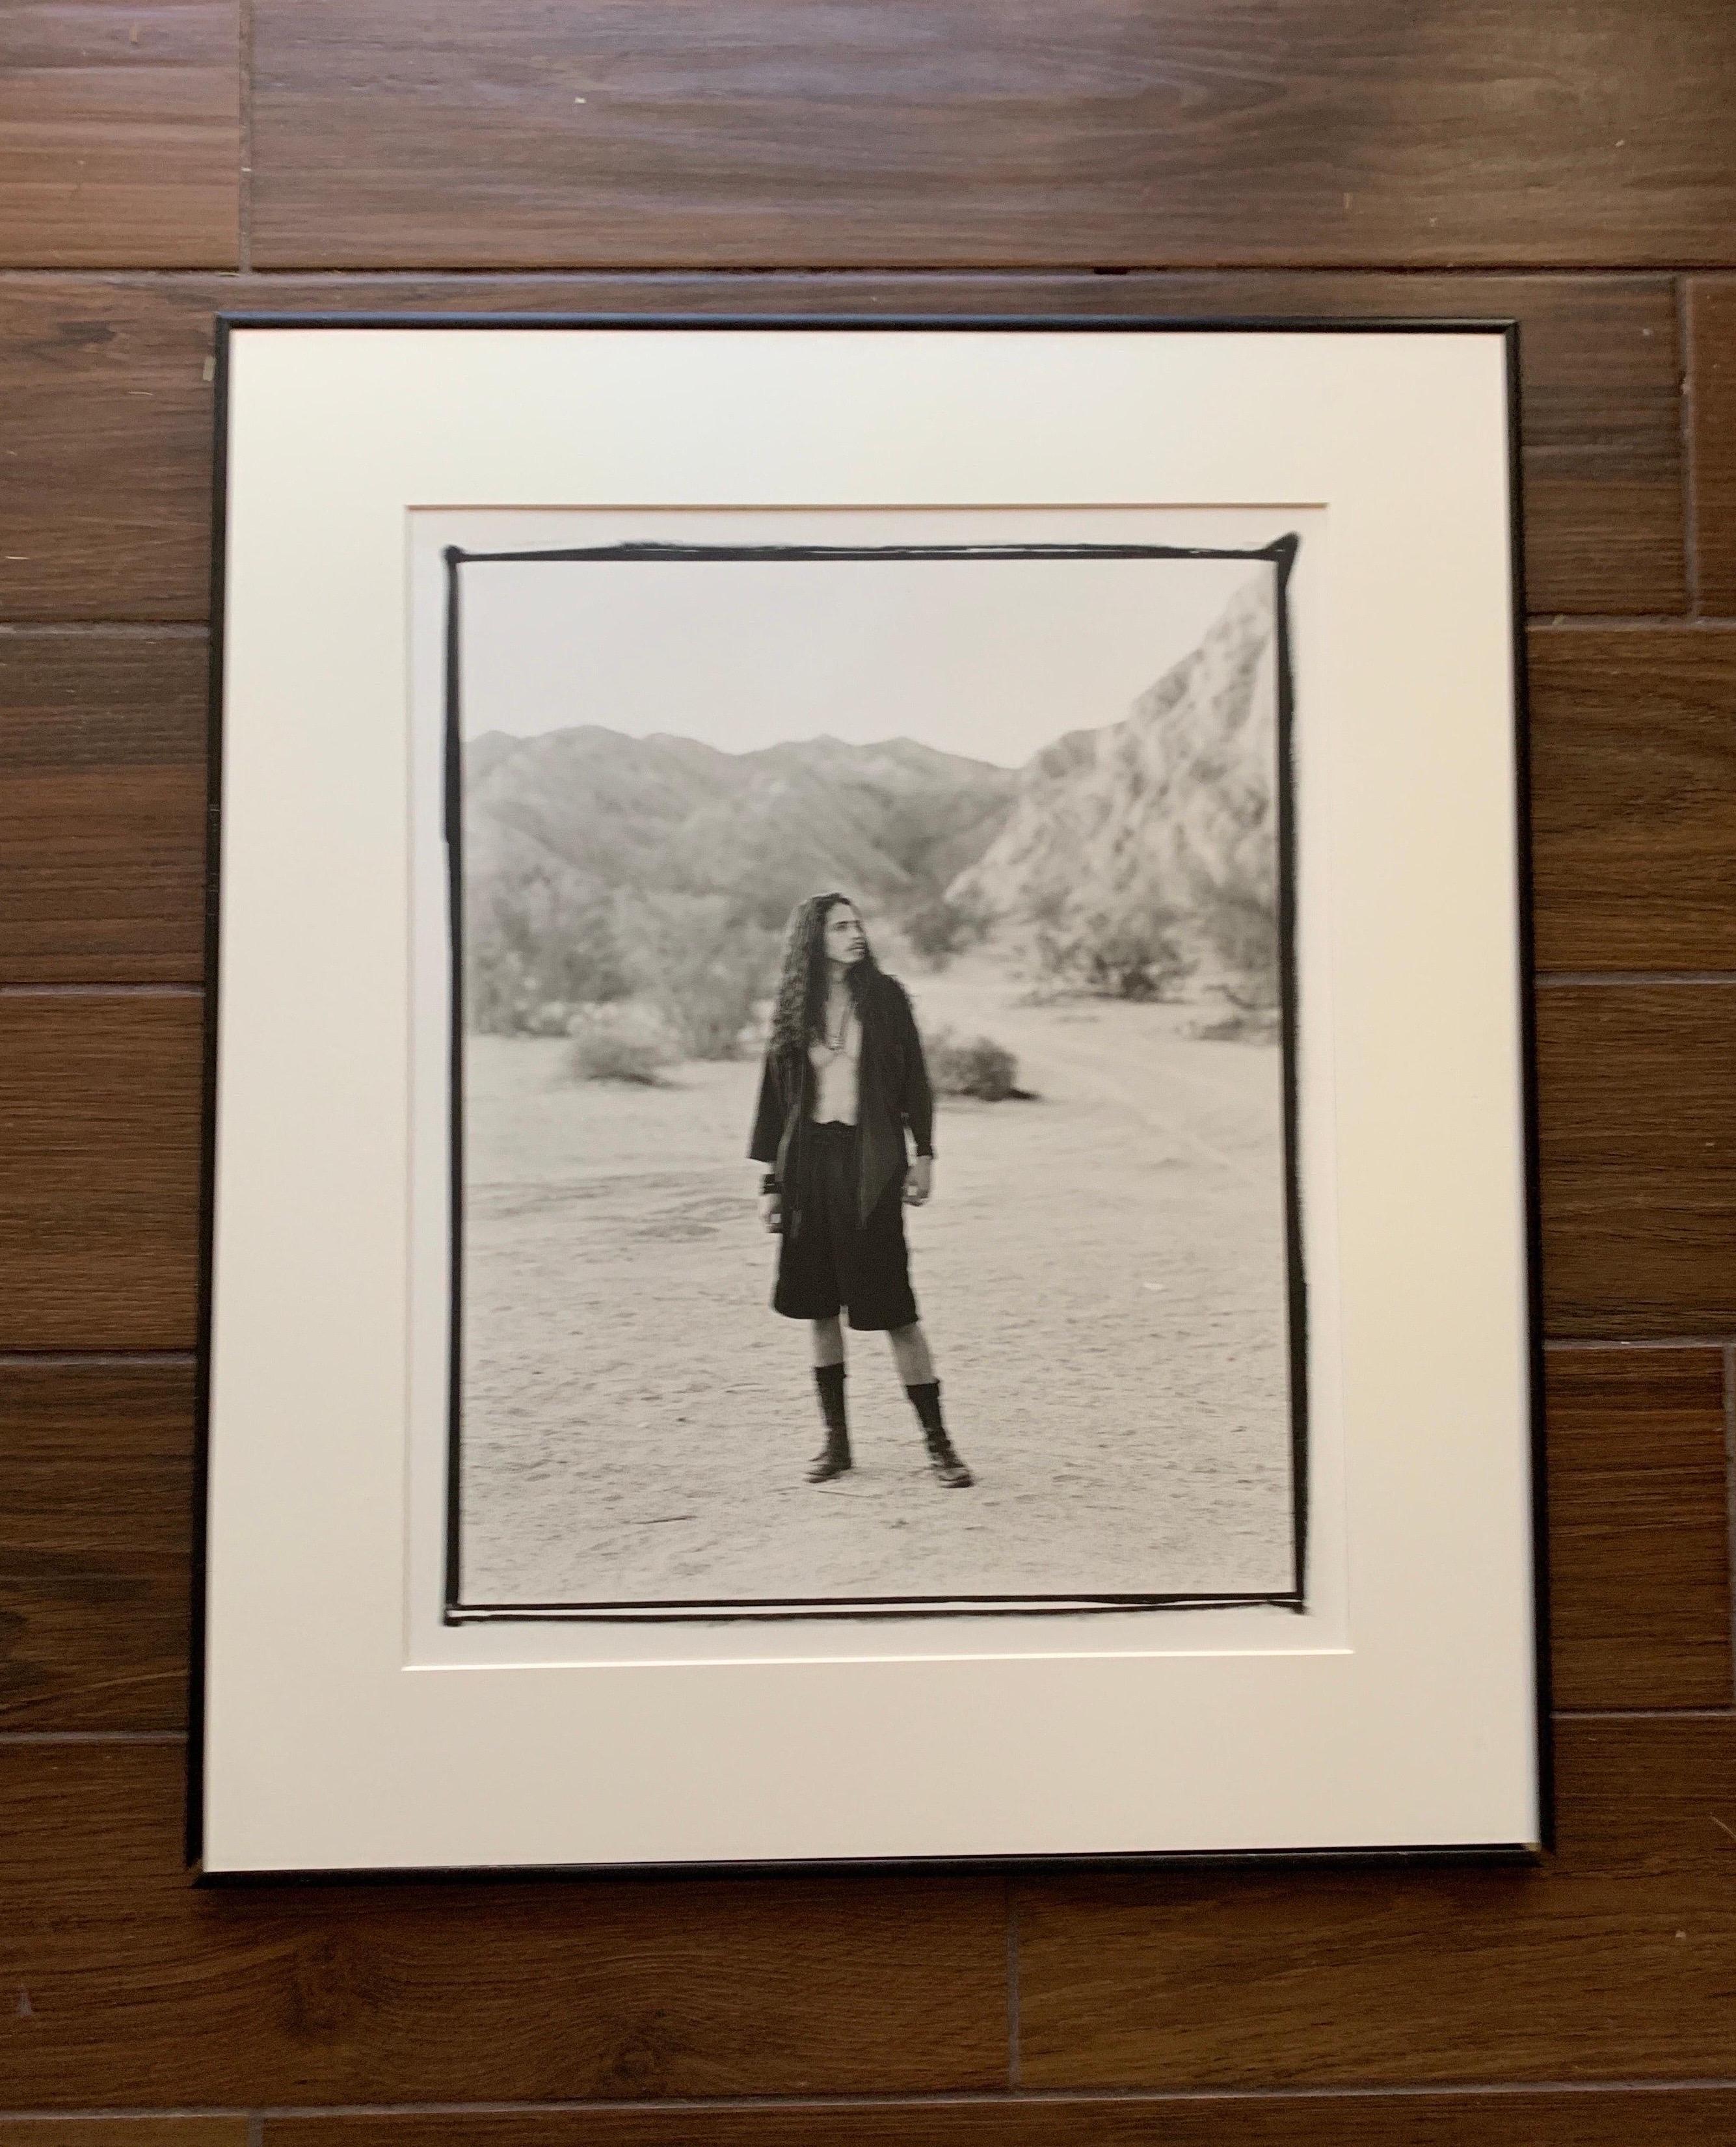 Hand-Crafted Chris Cornell “Portrait in Desert” Original Silver B&W Photograph by C. Cuffaro For Sale